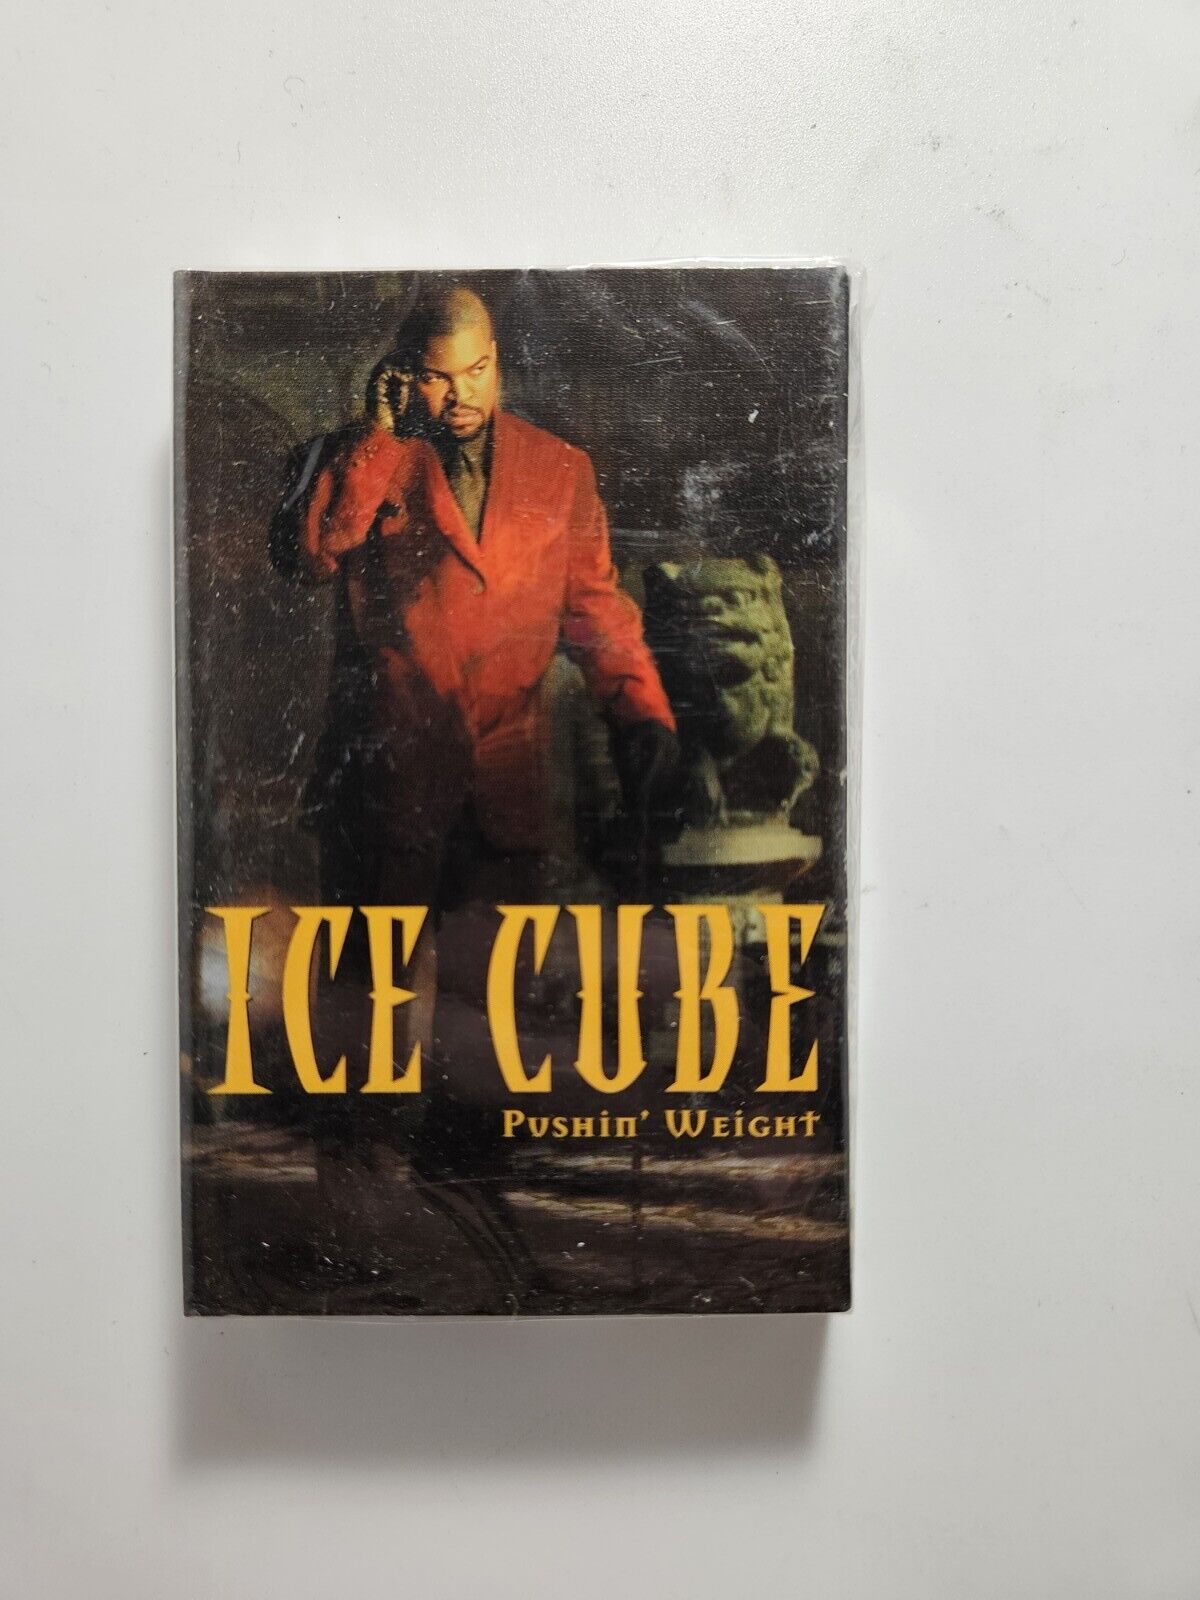 Sealed New Ice Cube Pushin Weight Cassette Single Tape Vintage tape Sealed Rare